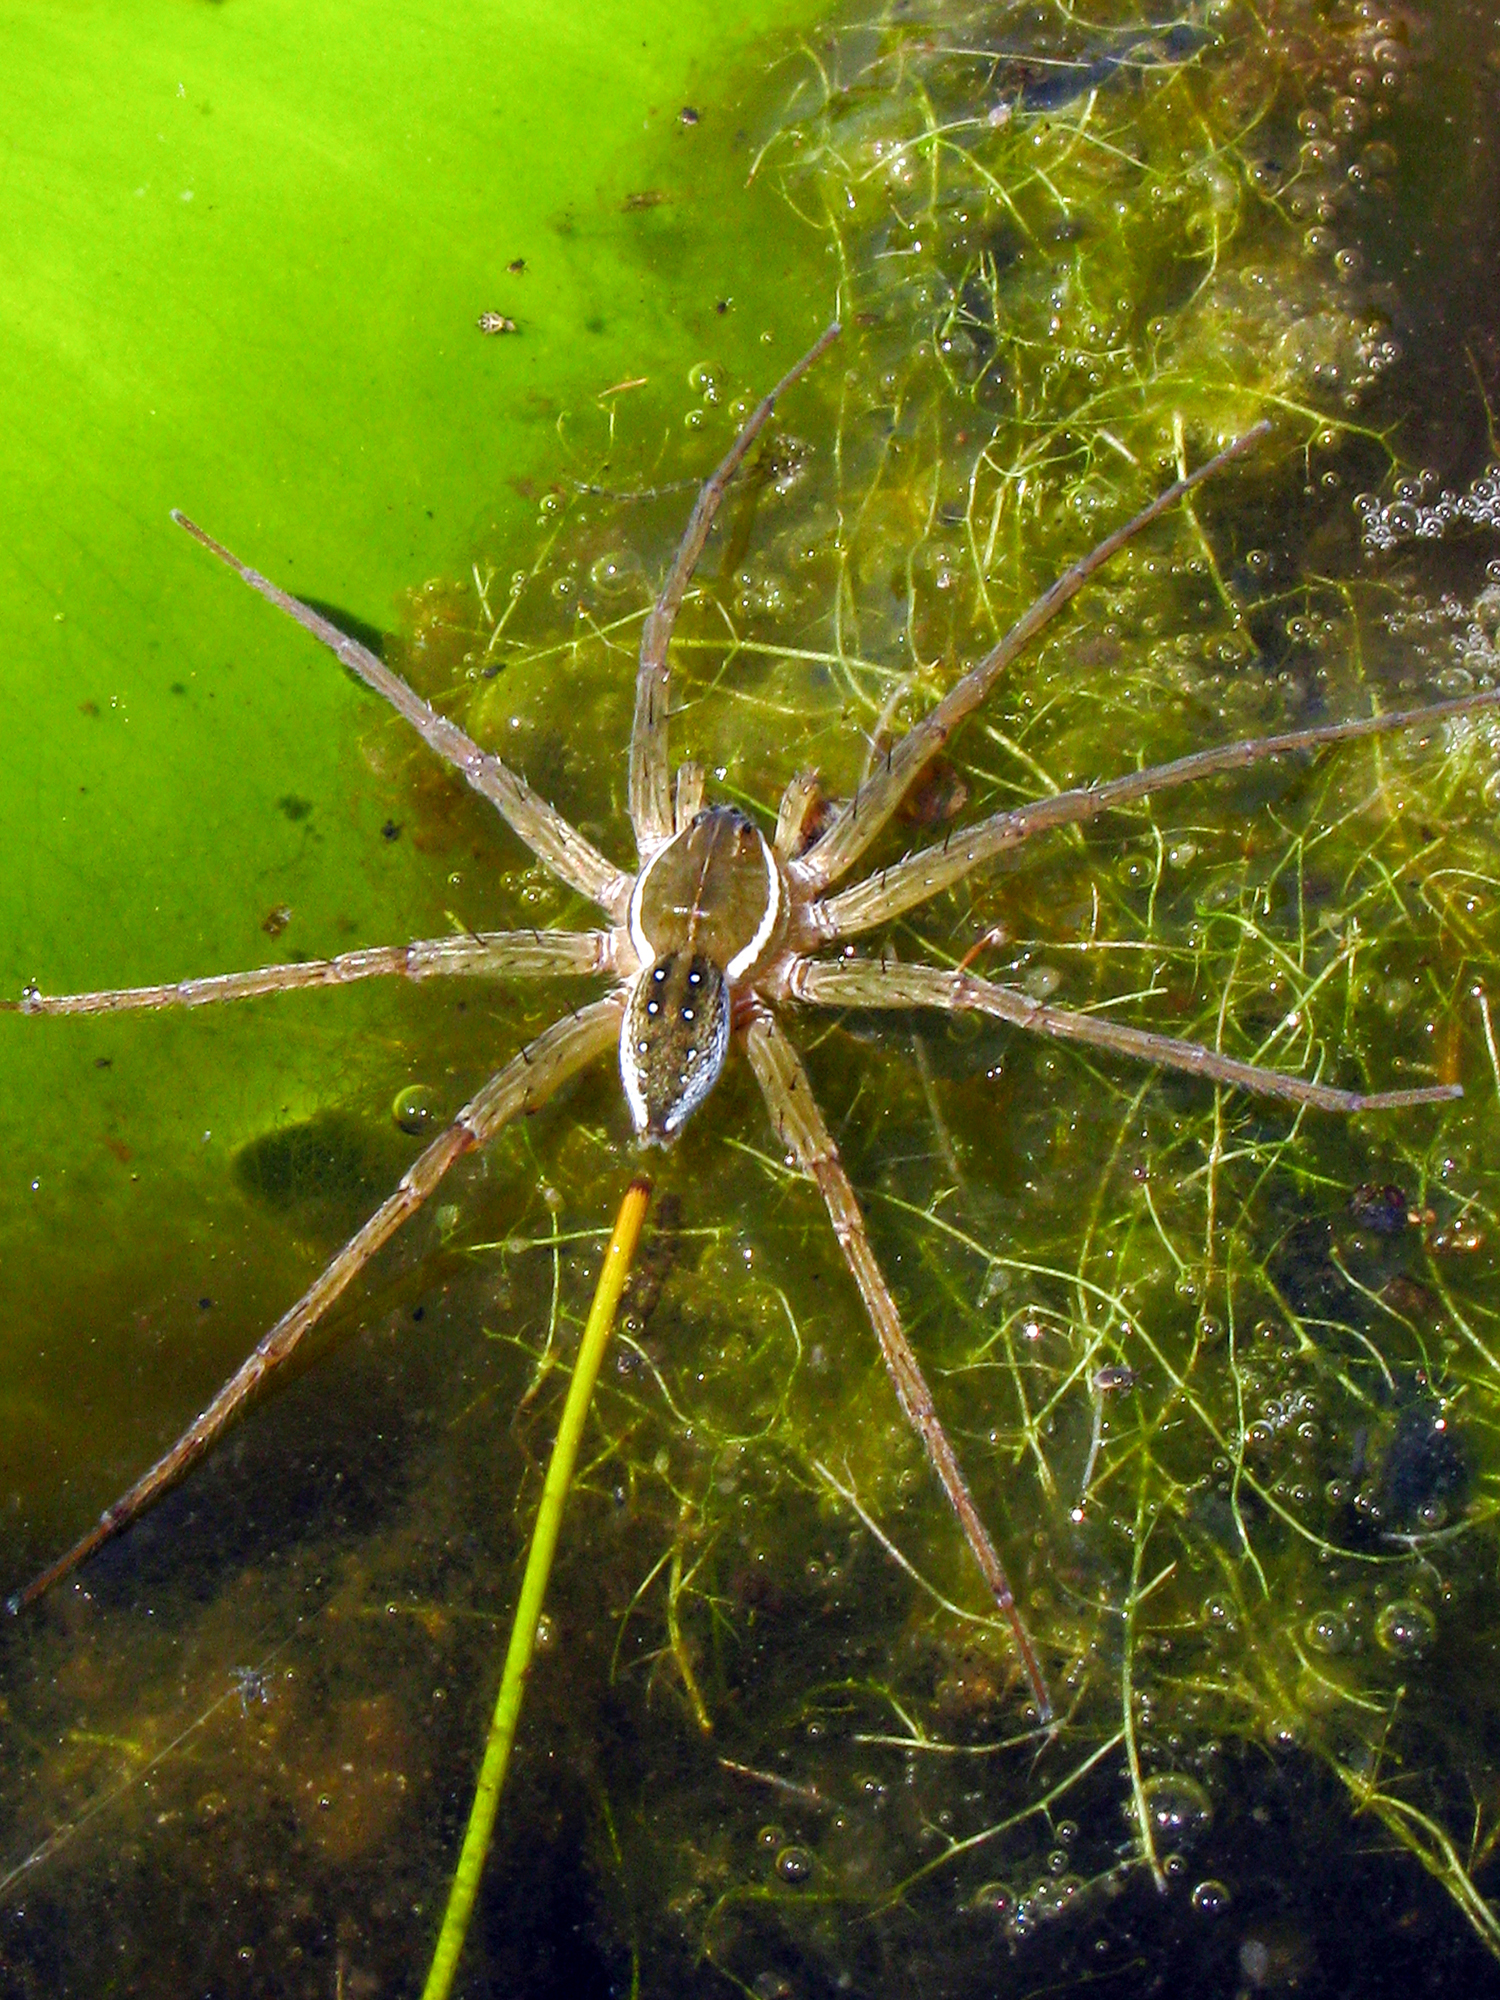 A spider hunts underwater in a stream.